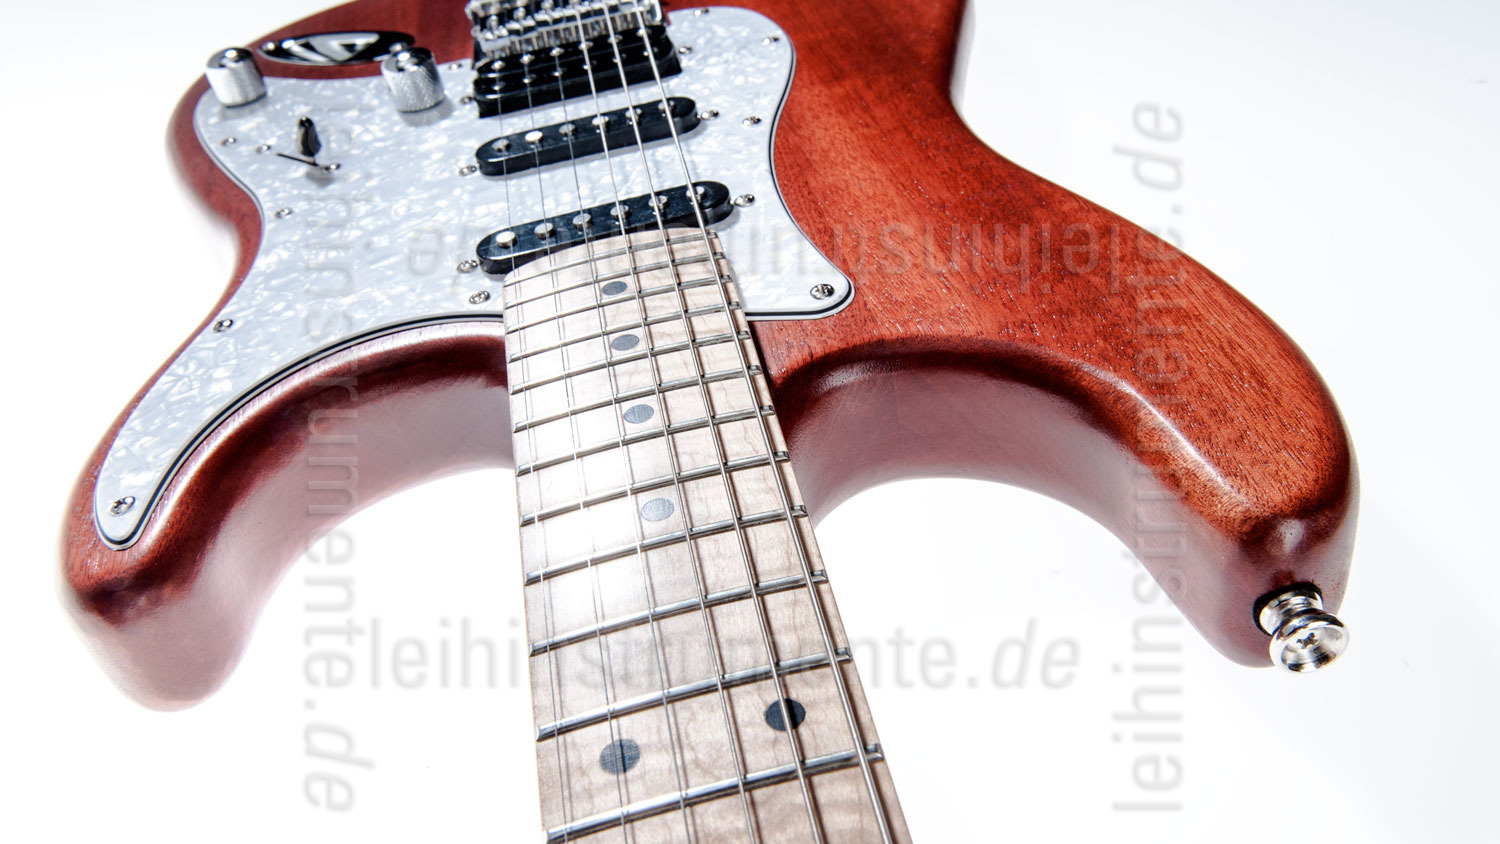 zur Artikelbeschreibung / Preis E-Gitarre BERSTECHER New Whisky + Koffer - made in Germany